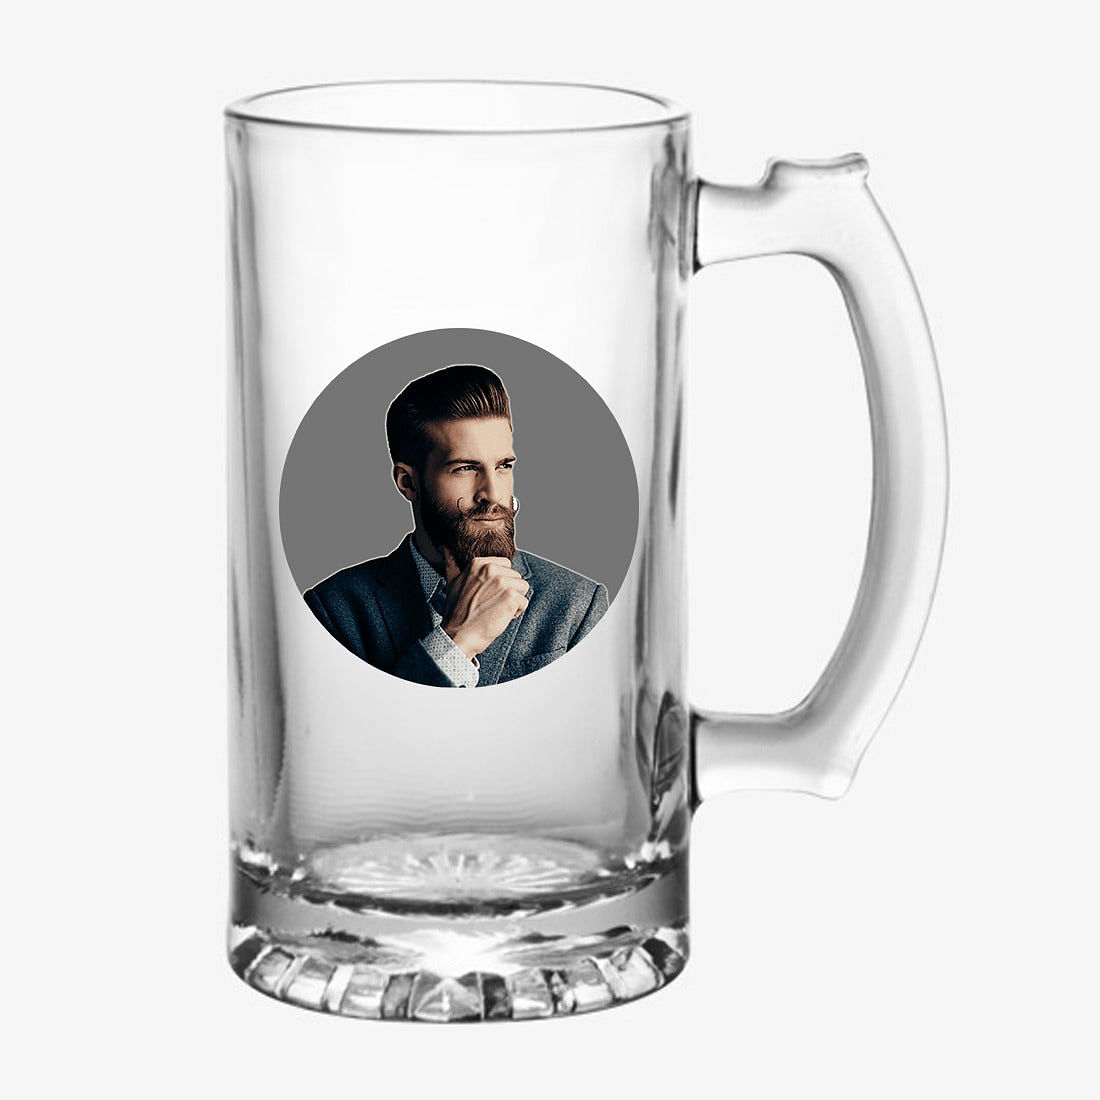 Customized Beer Mug Glass - Add Your Photo nutcaseshop